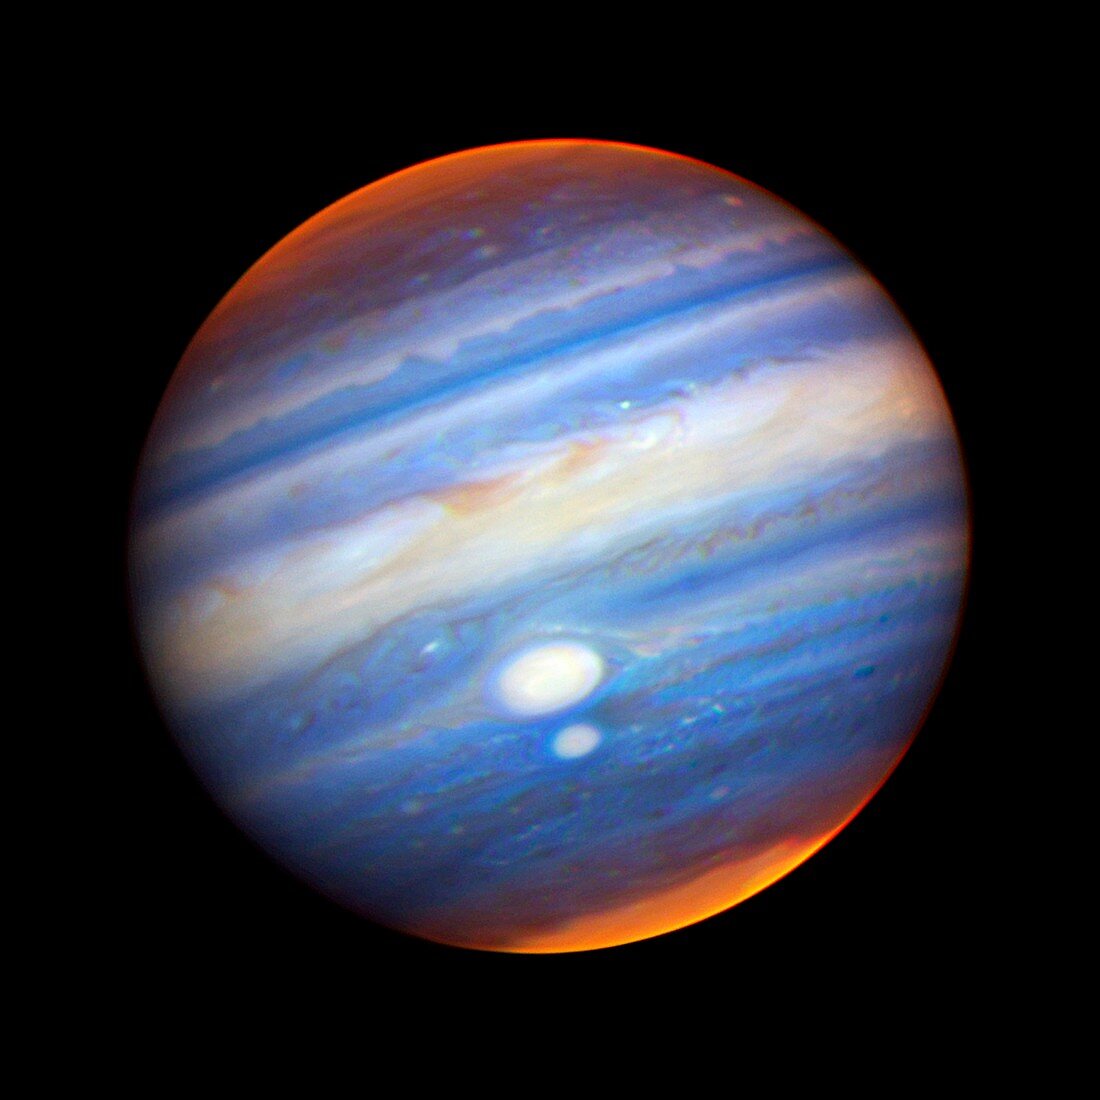 Jupiter,infrared Gemini North image